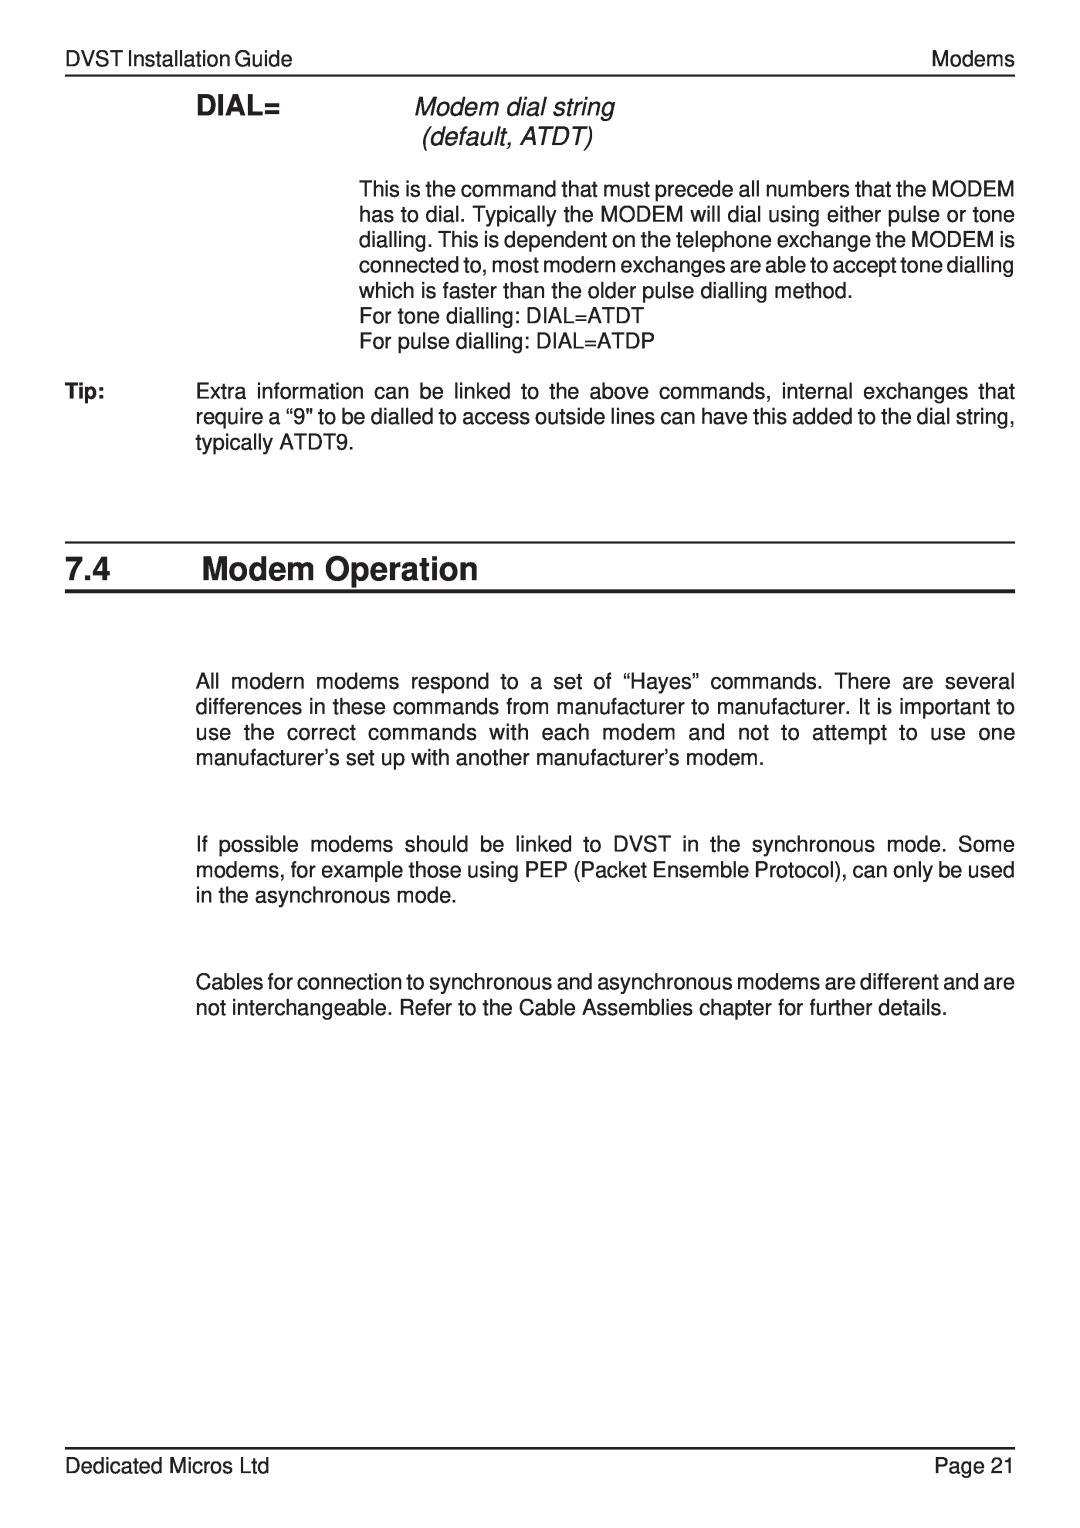 Guardian Technologies DFT 150/175, DVST manual 7.4Modem Operation, Dial=, Modem dial string, default, ATDT 